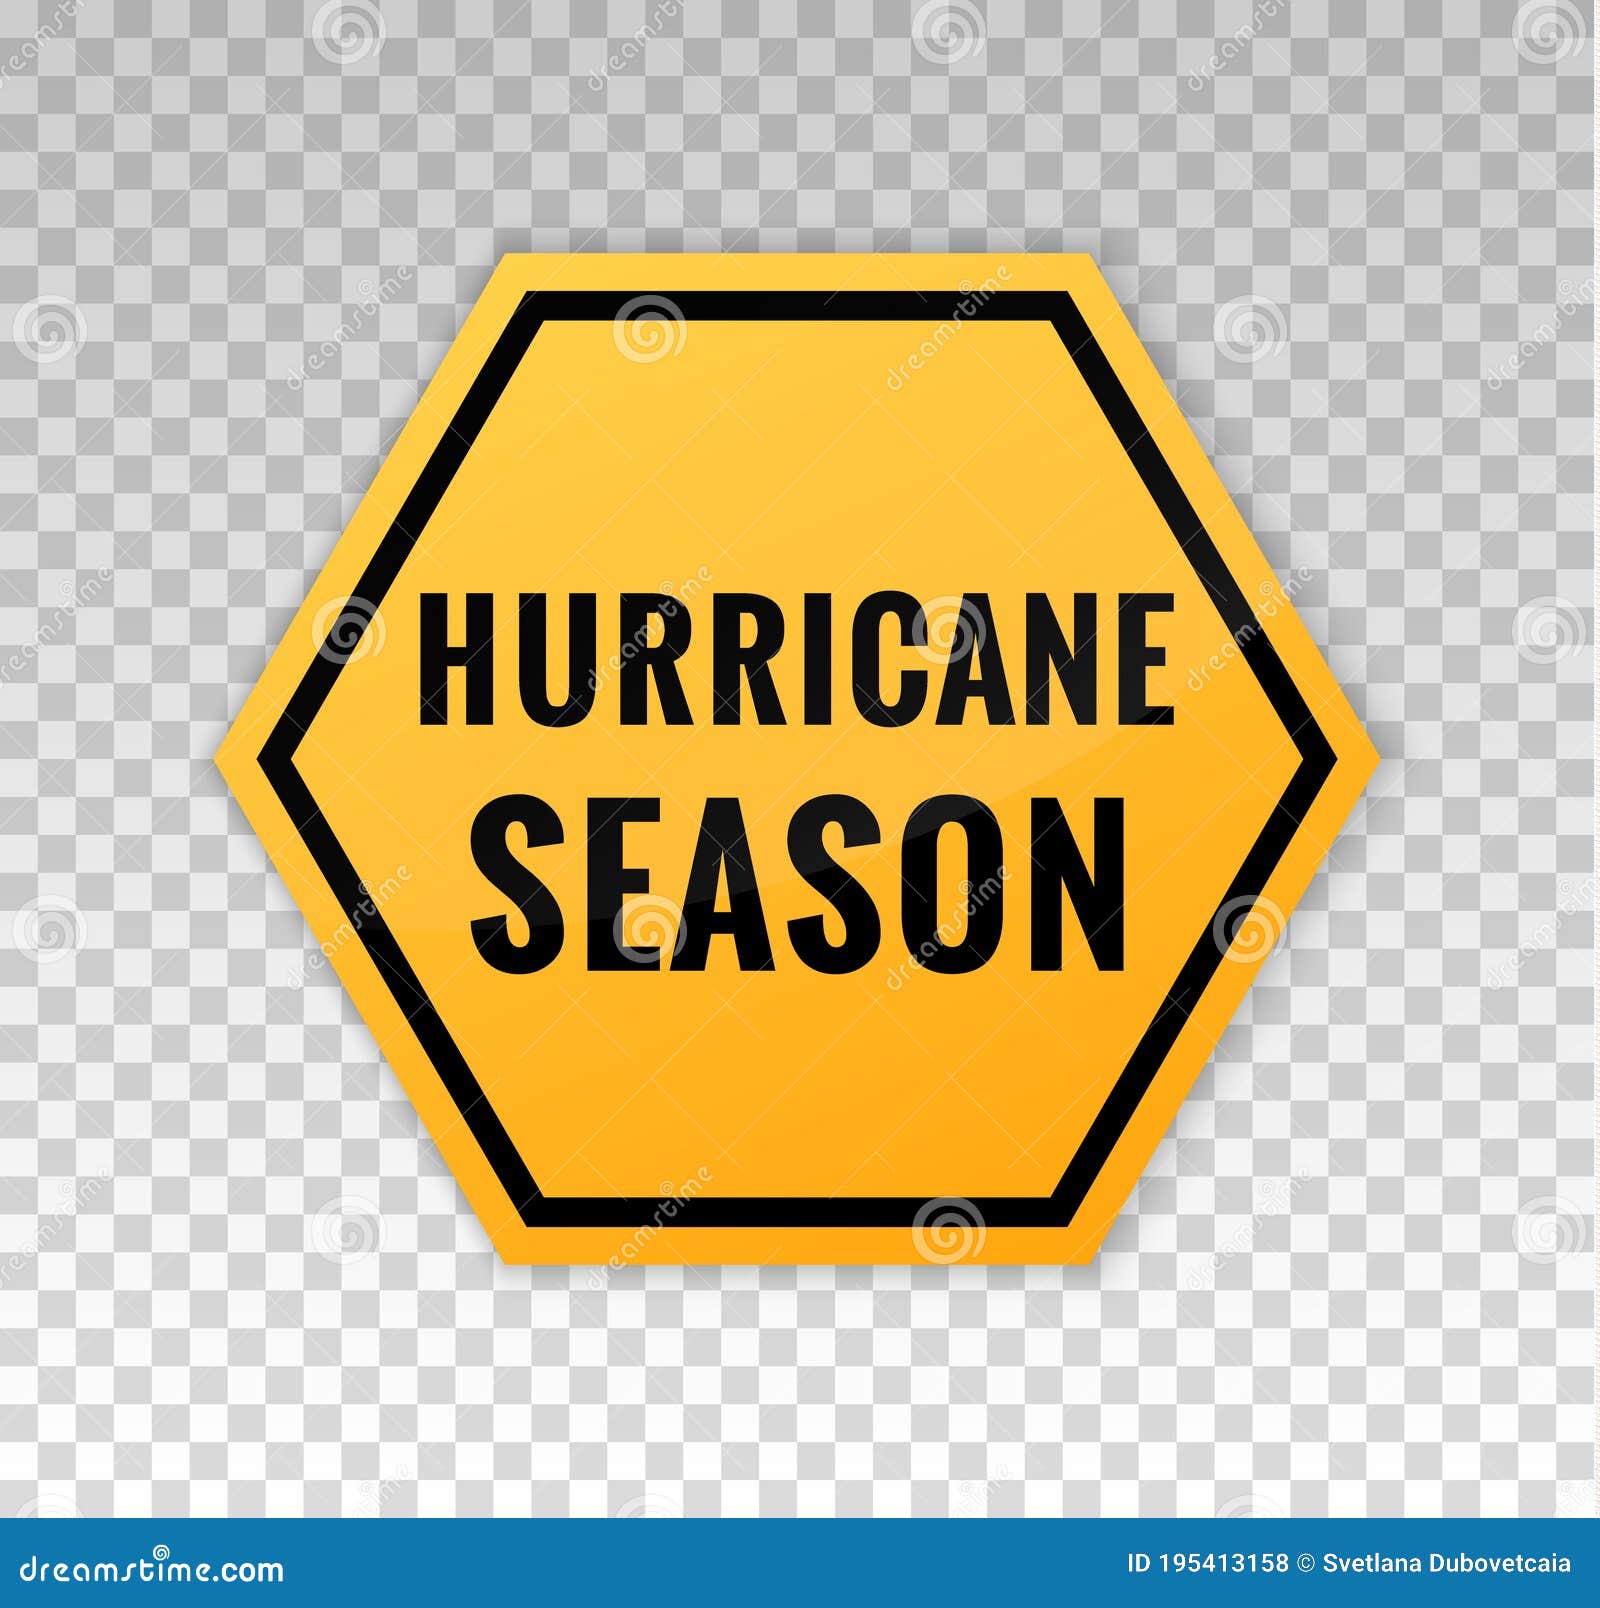 hurricane season sign. alert icon tempest. forecast tornado. blow hurricane. cyclone evacuation. warning monsoon, tropical storm,